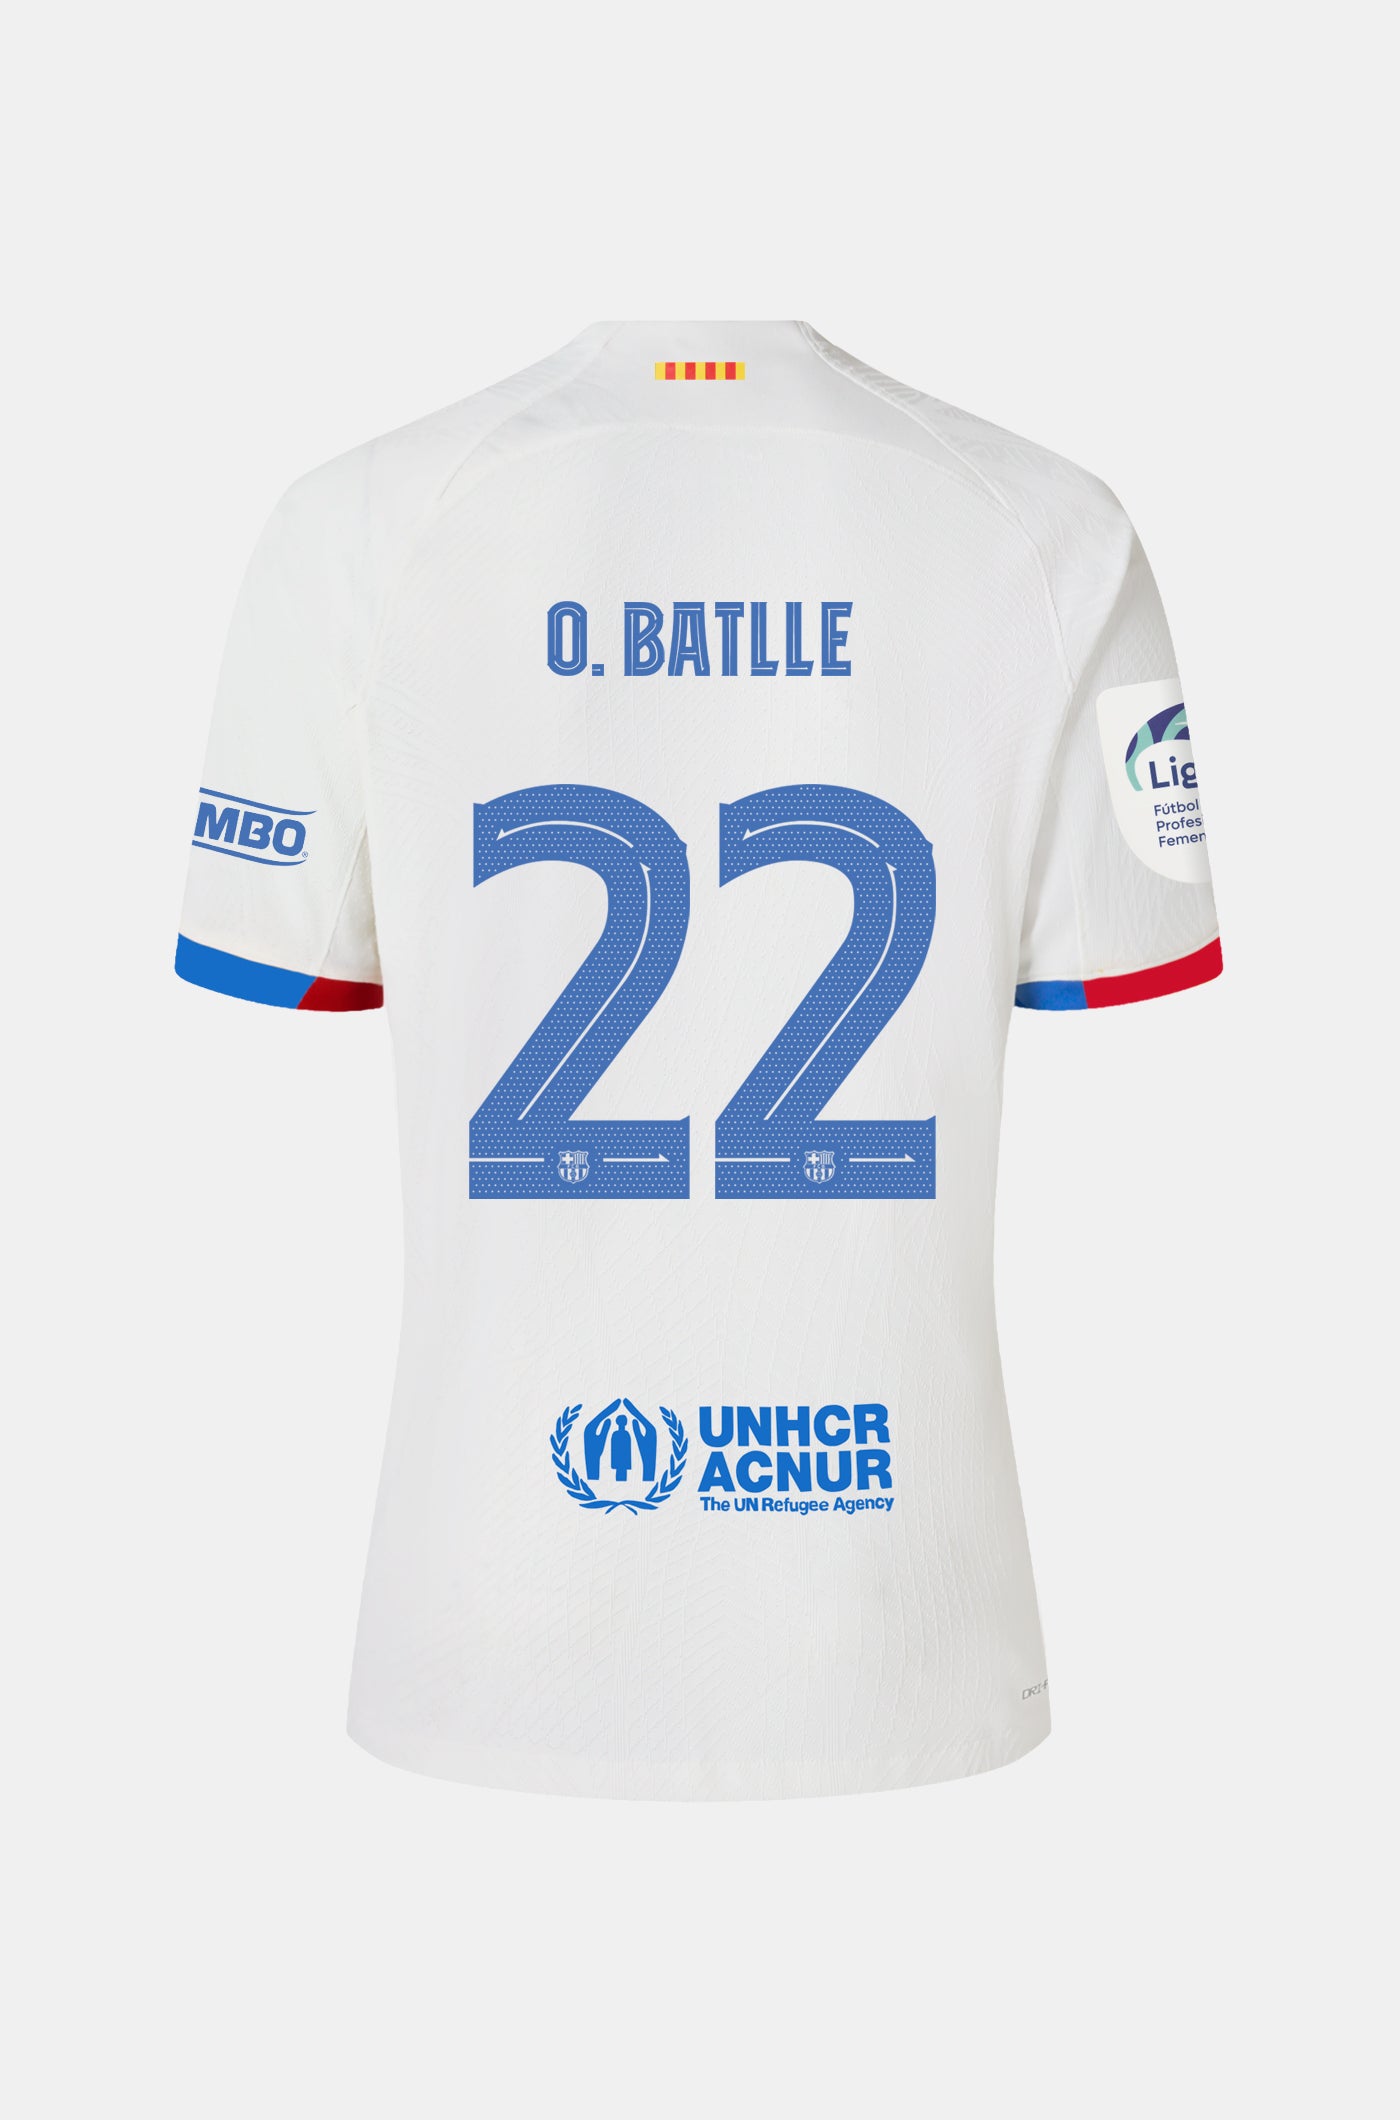 Liga F FC Barcelona Away Shirt 23/24 Player’s Edition - Women  - O. BATLLE